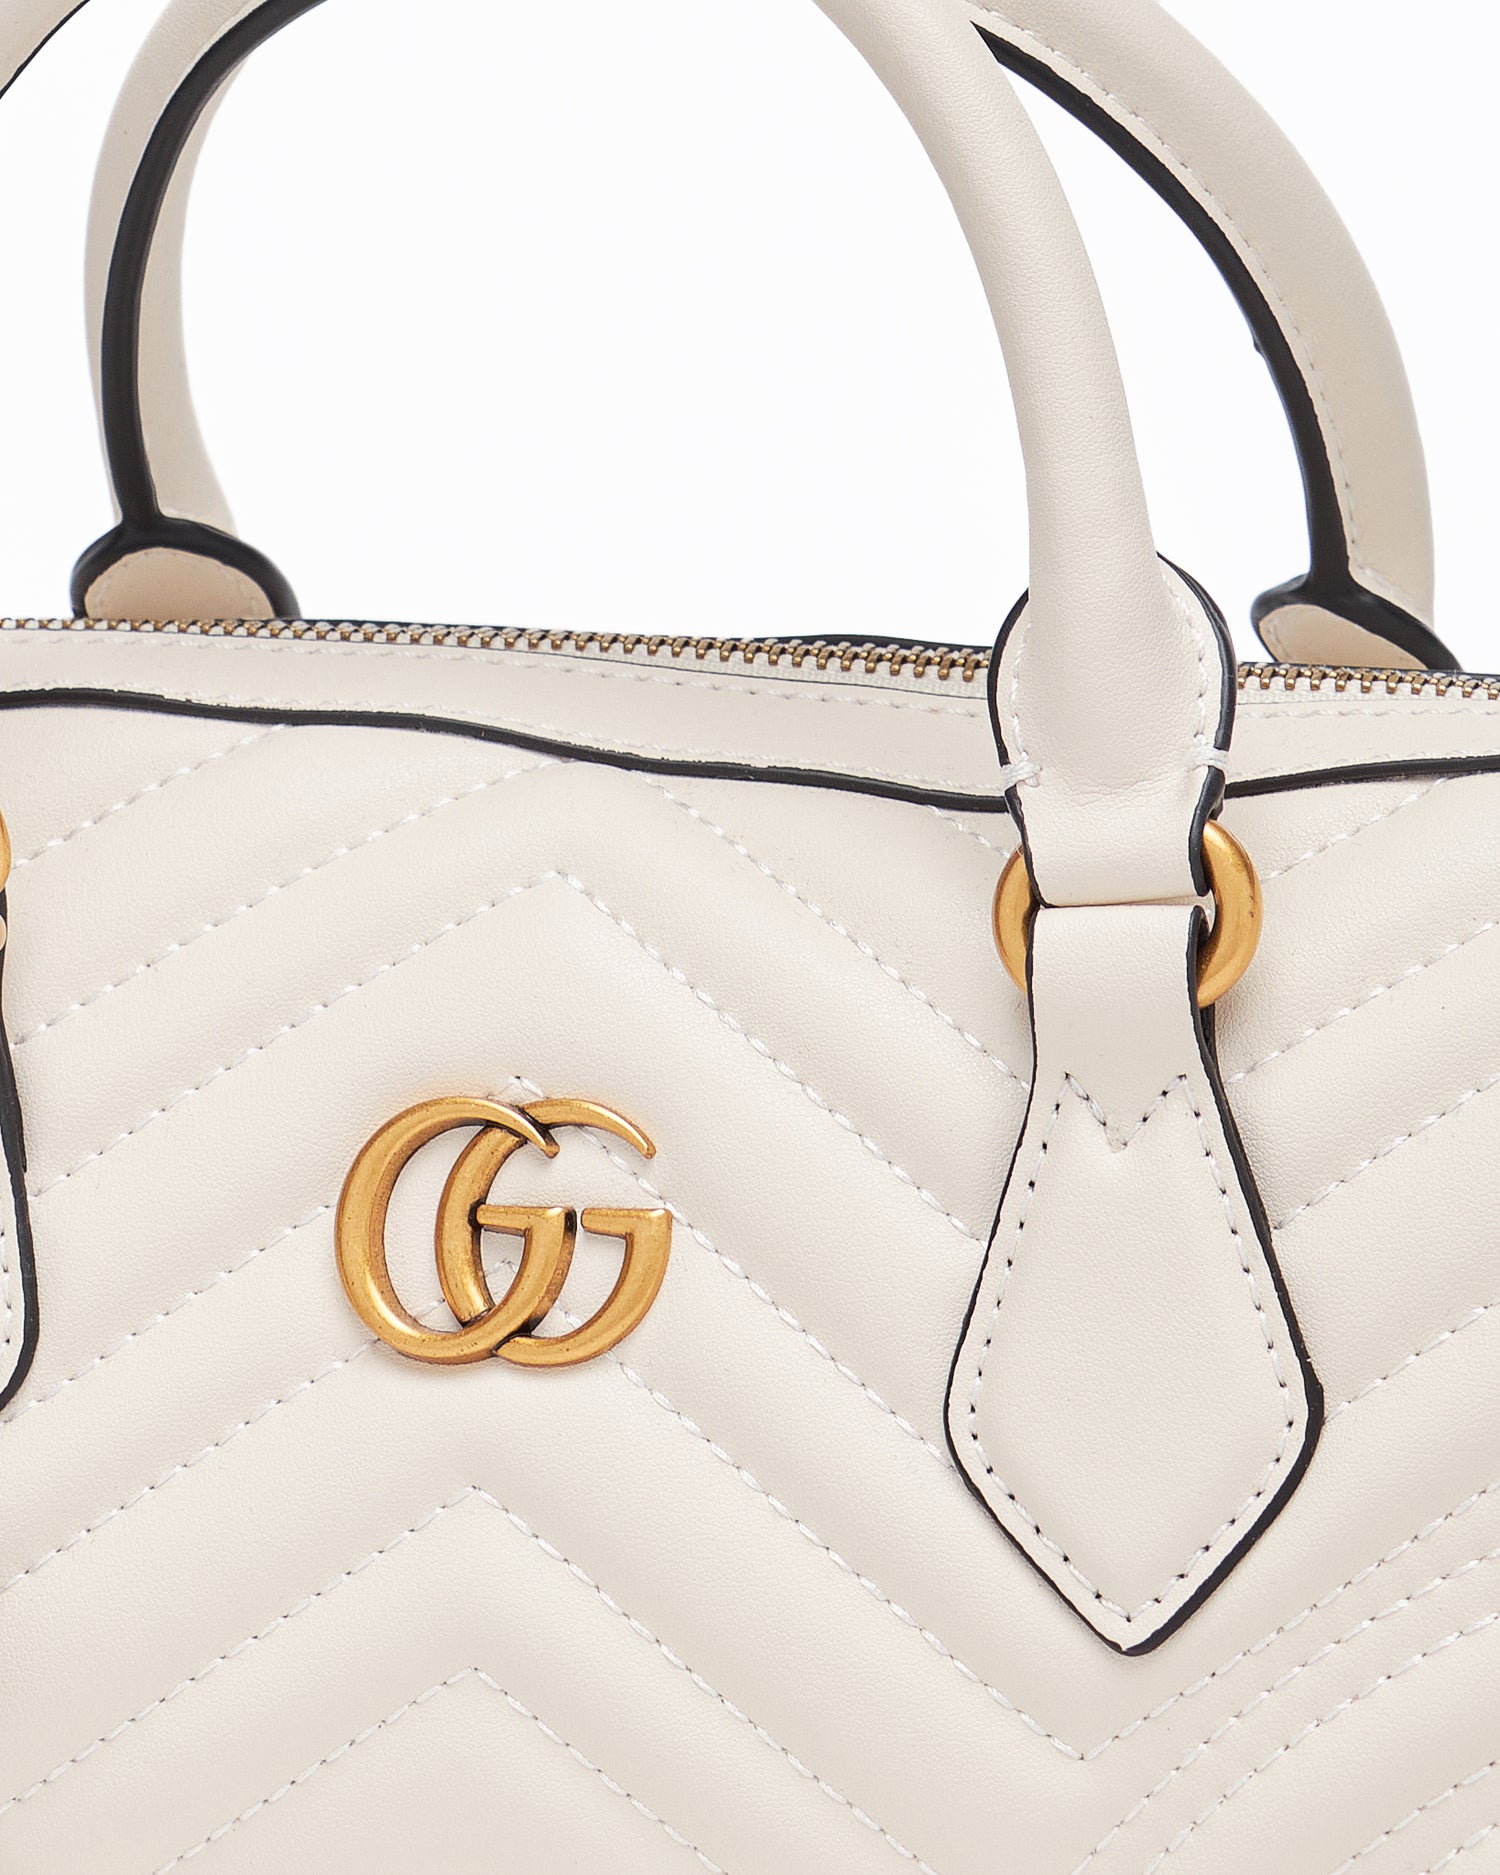 GUC Marmont Lady Cream Shoulder Bag 79.90